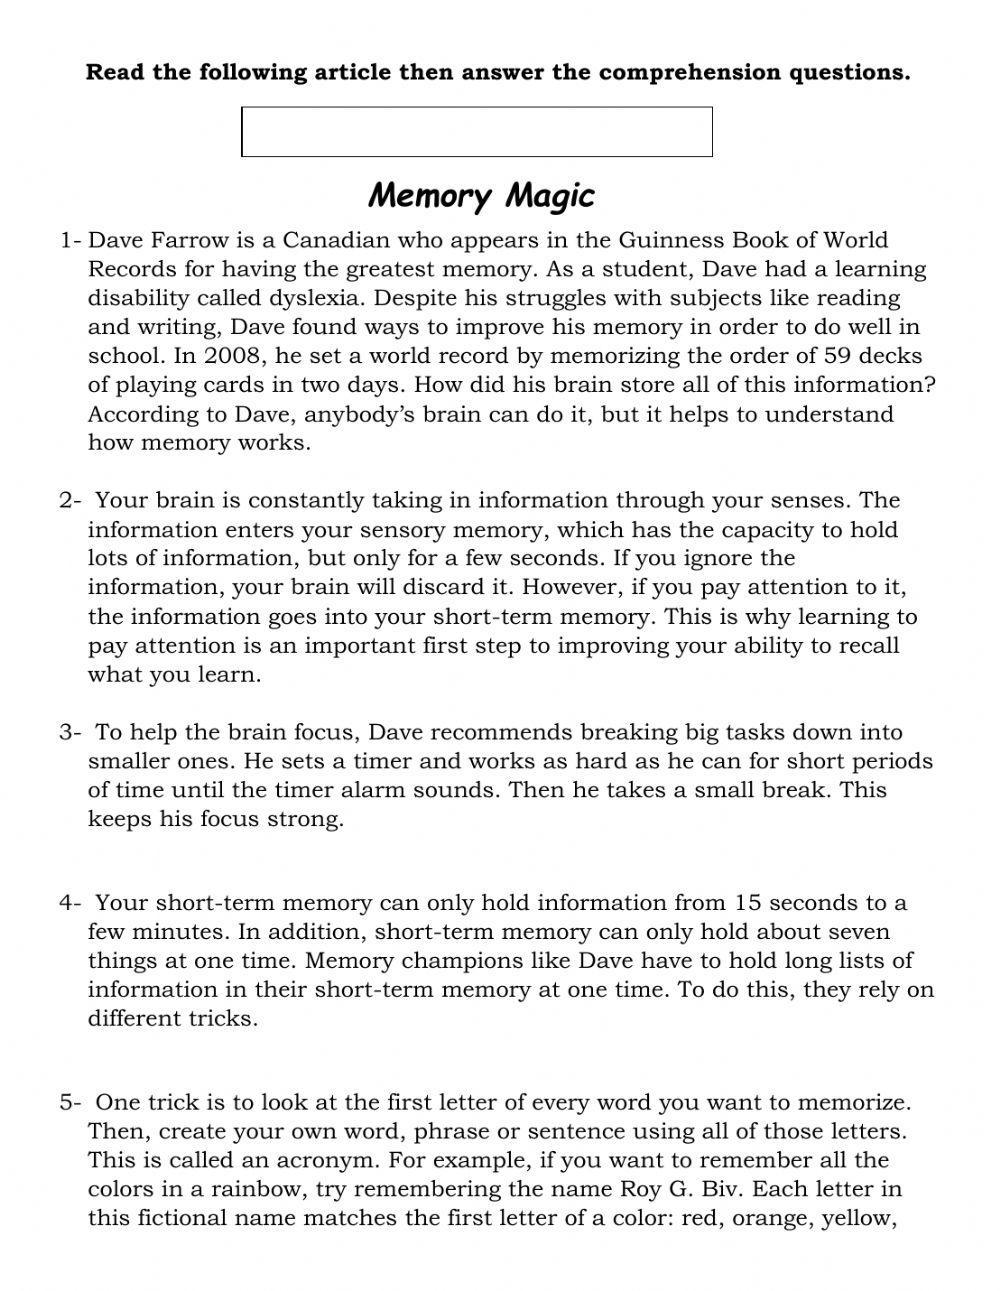 reading memory magic